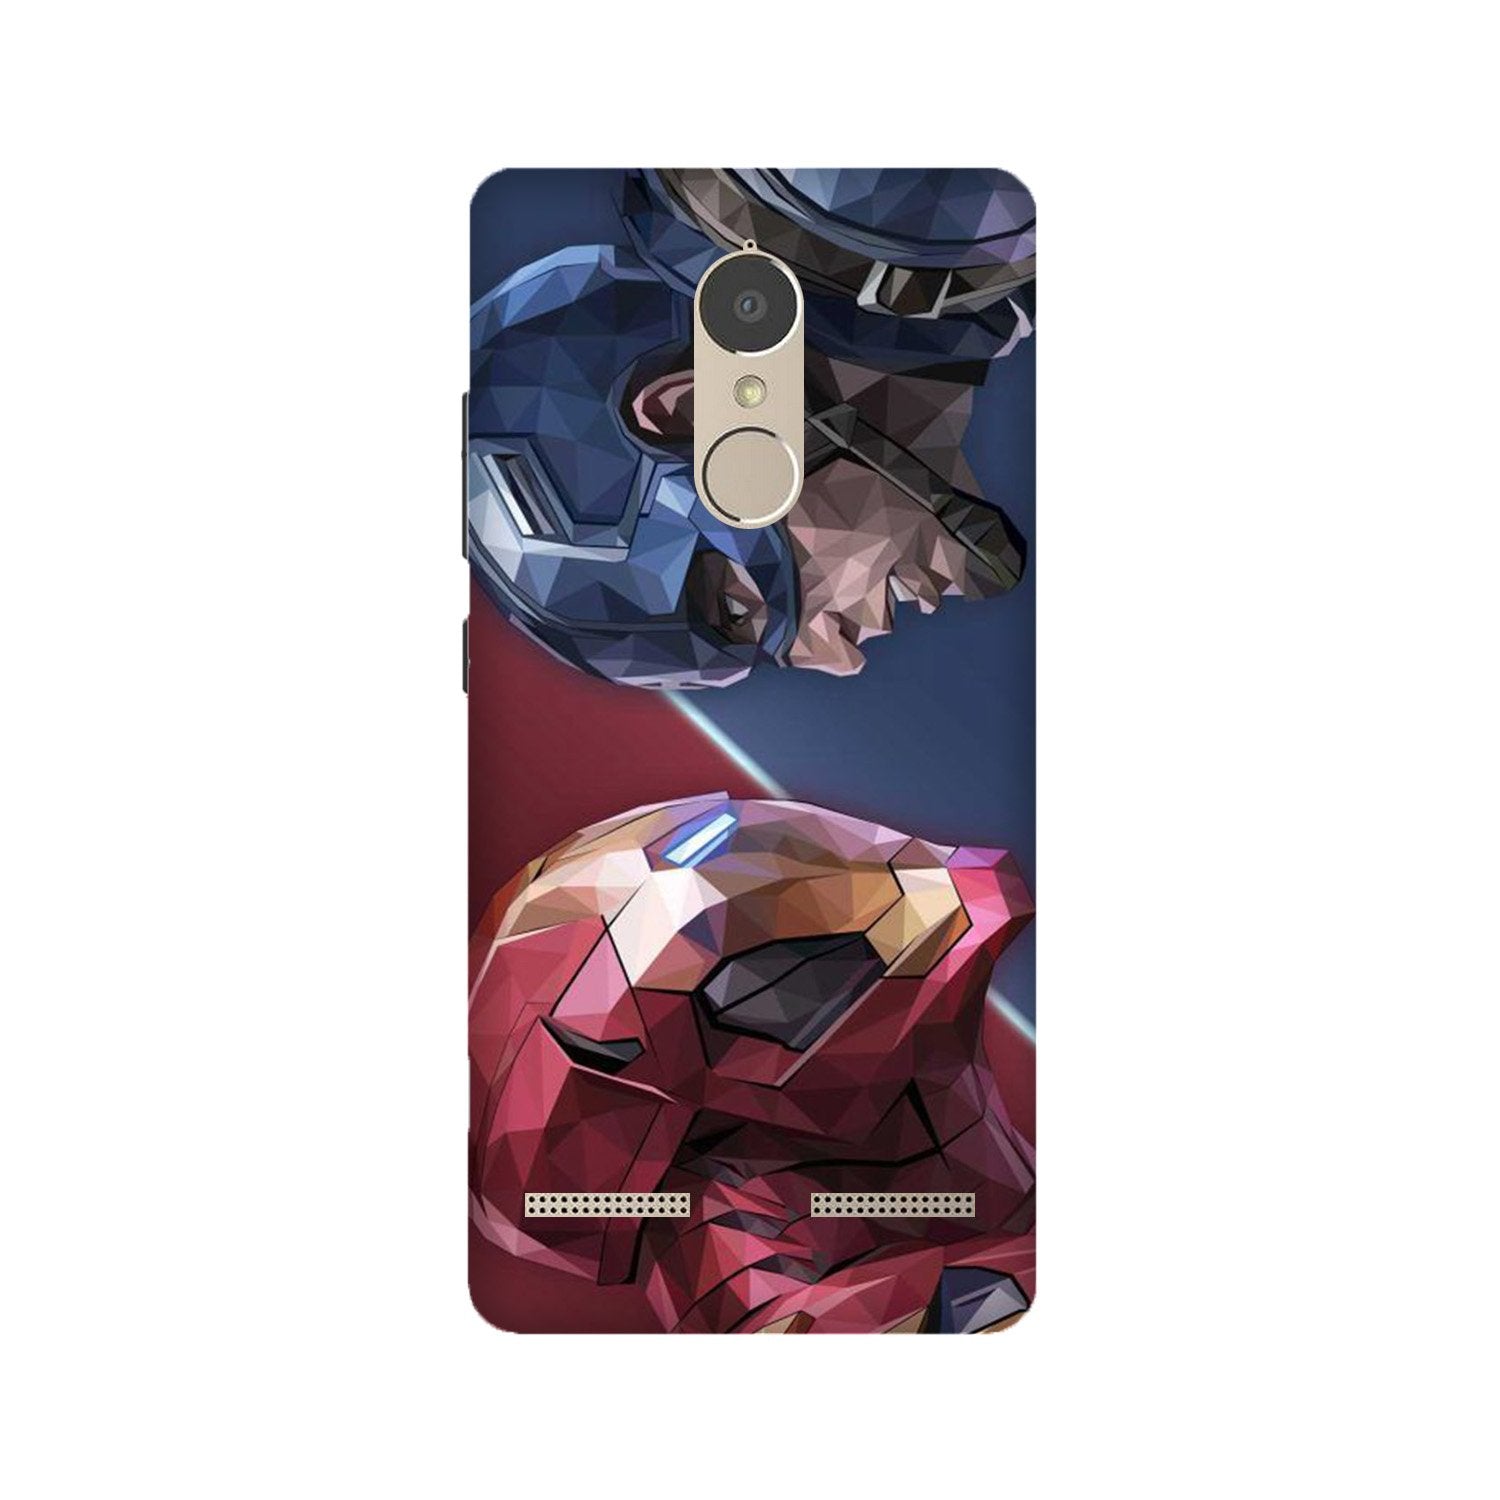 Ironman Captain America Case for Lenovo K6 / K6 Power (Design No. 245)